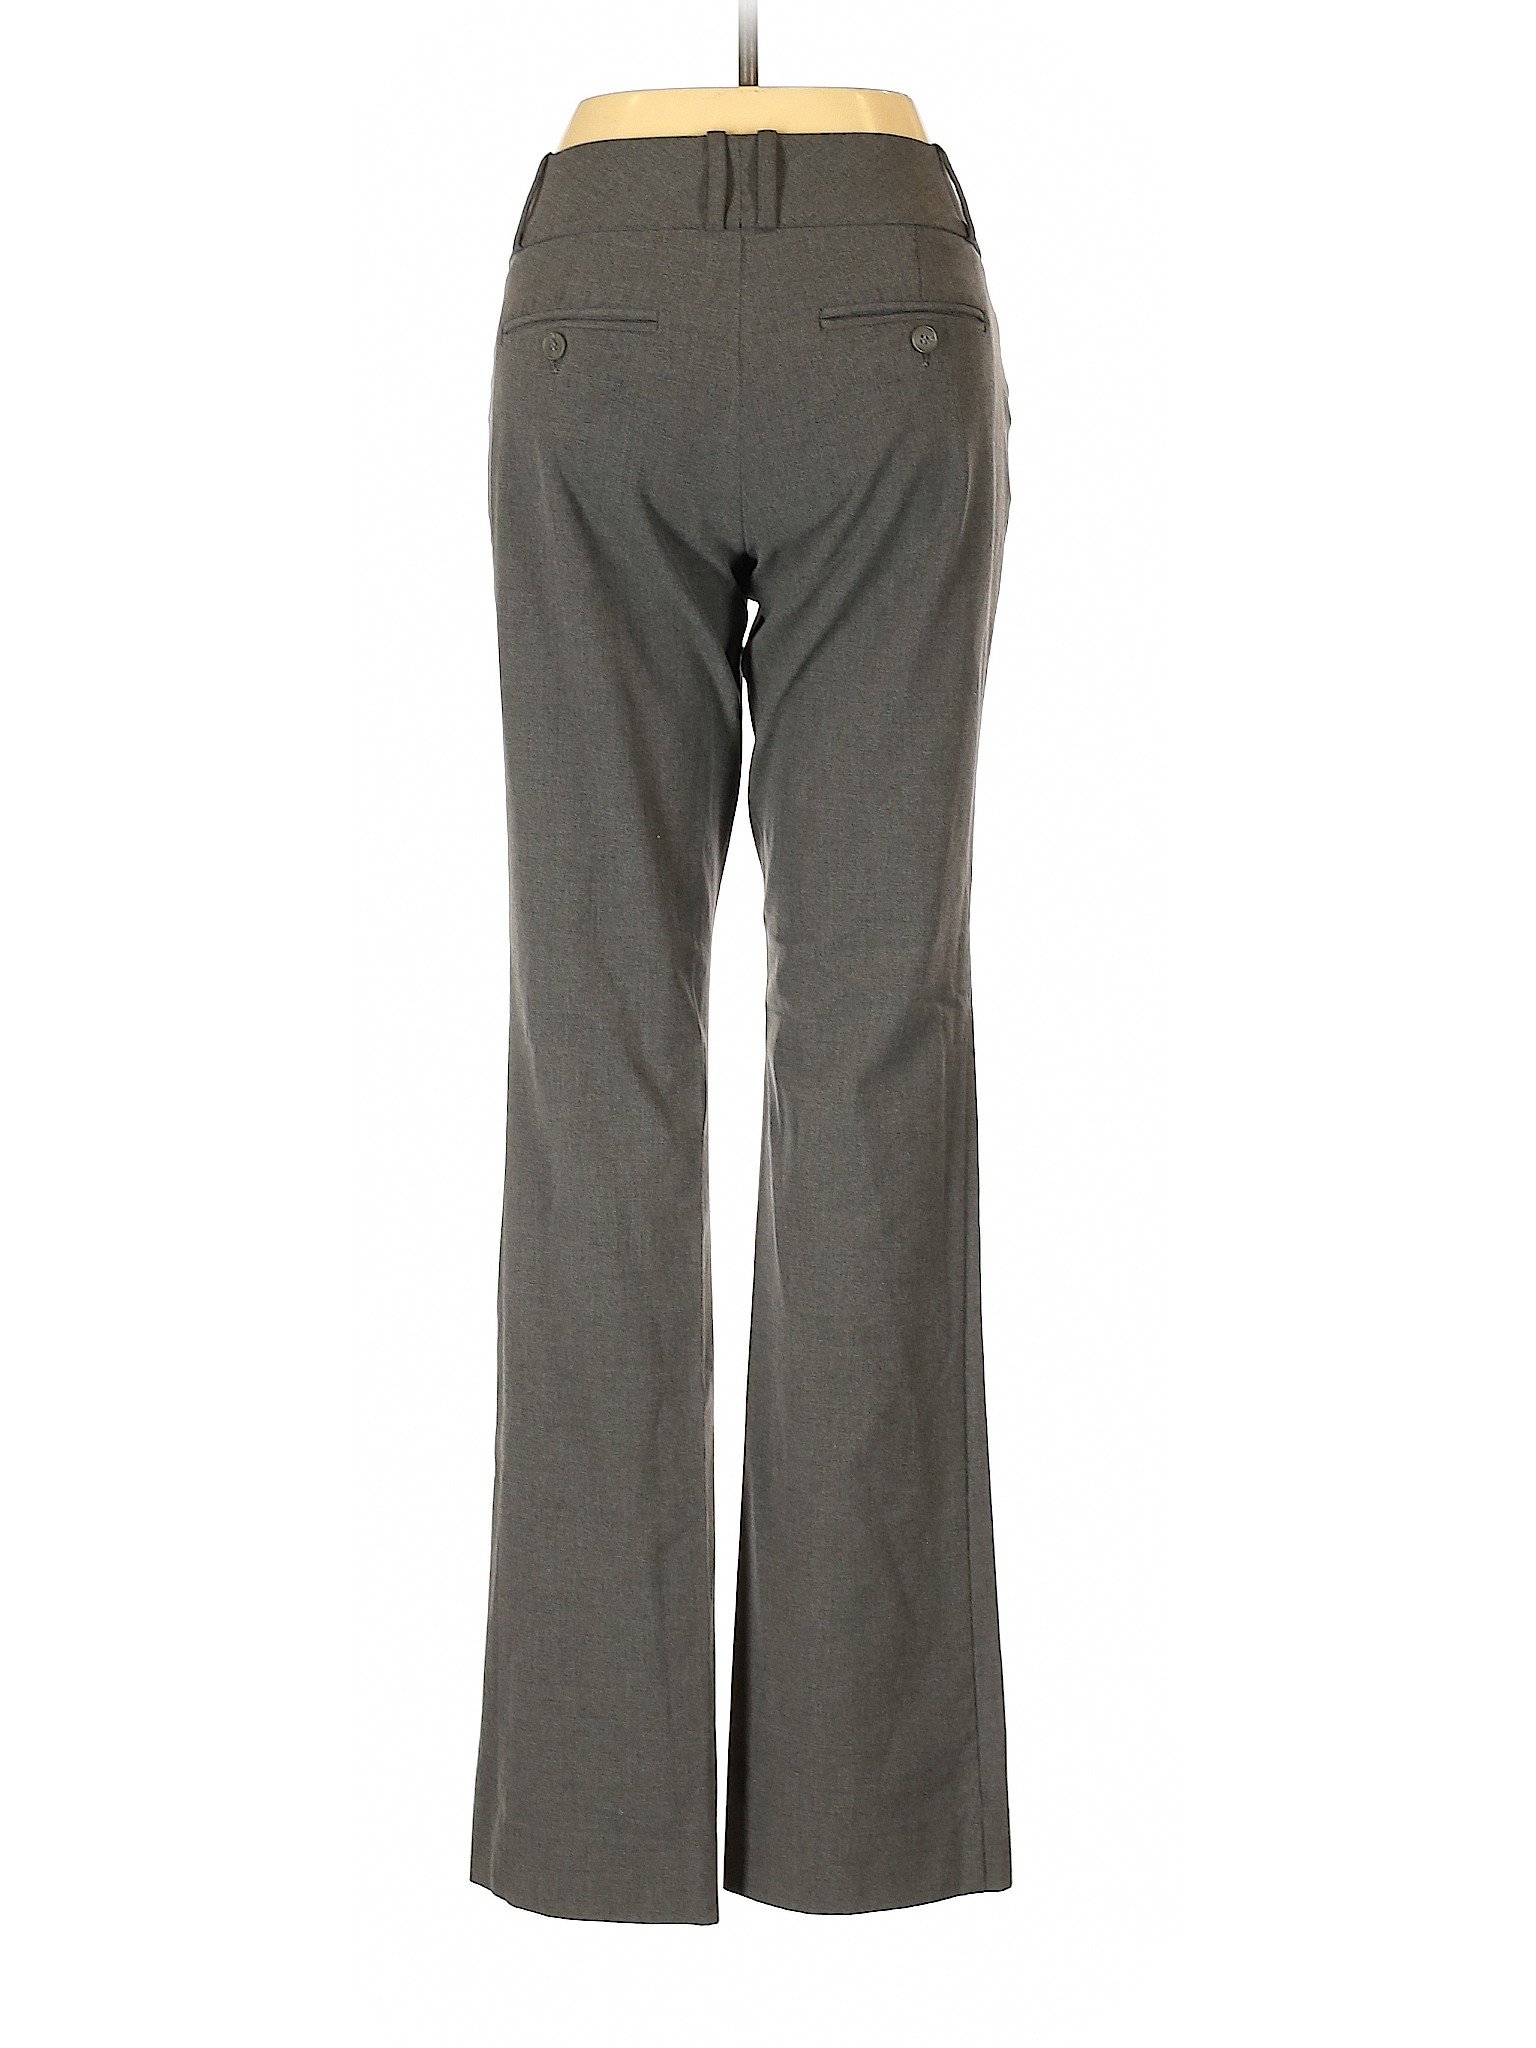 The Limited Women Gray Dress Pants 4 | eBay